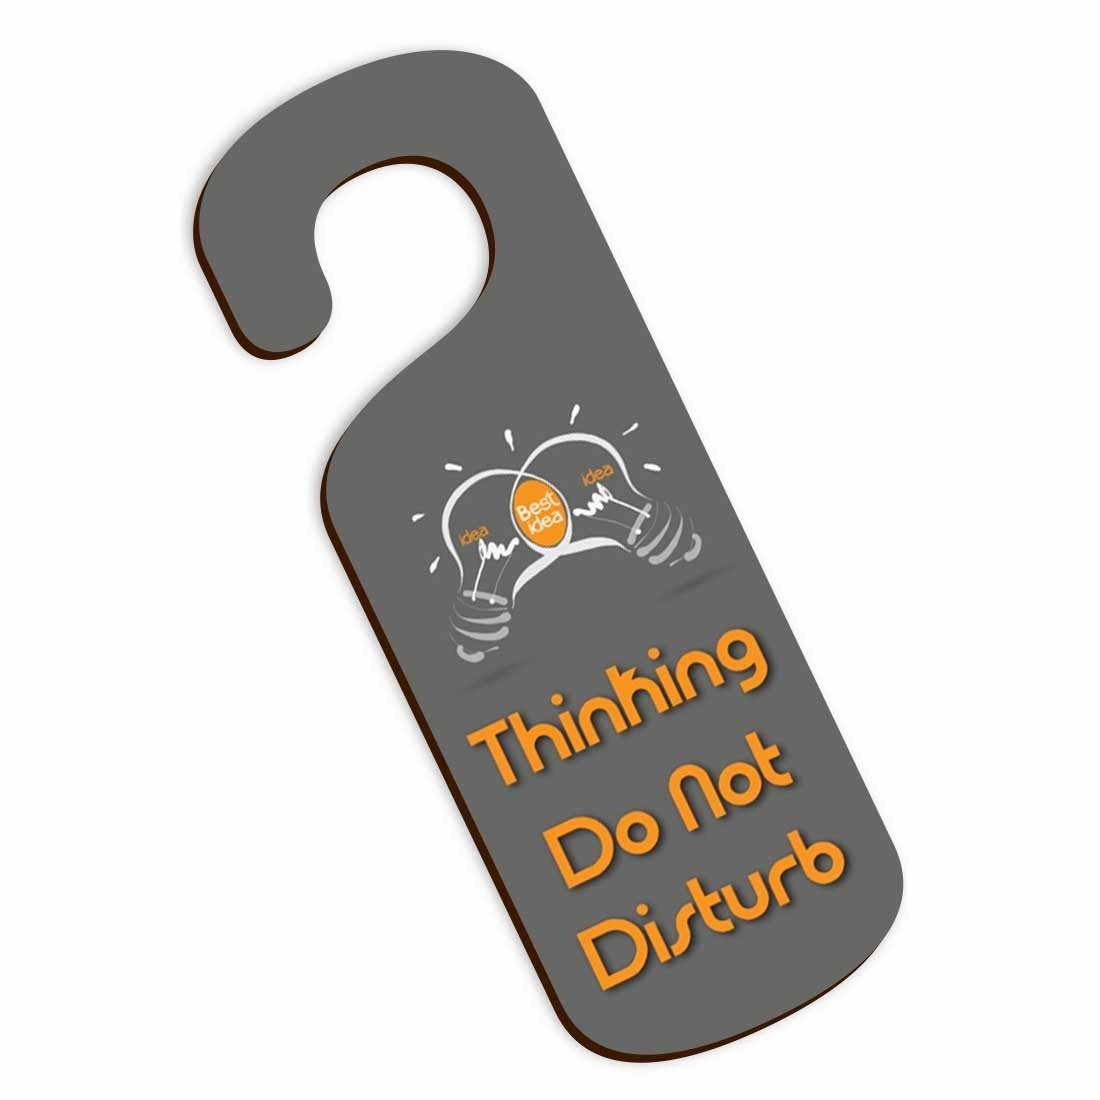 A grey door knob sign that says &#x27;Thinking. Do Not Disturb.&#x27;